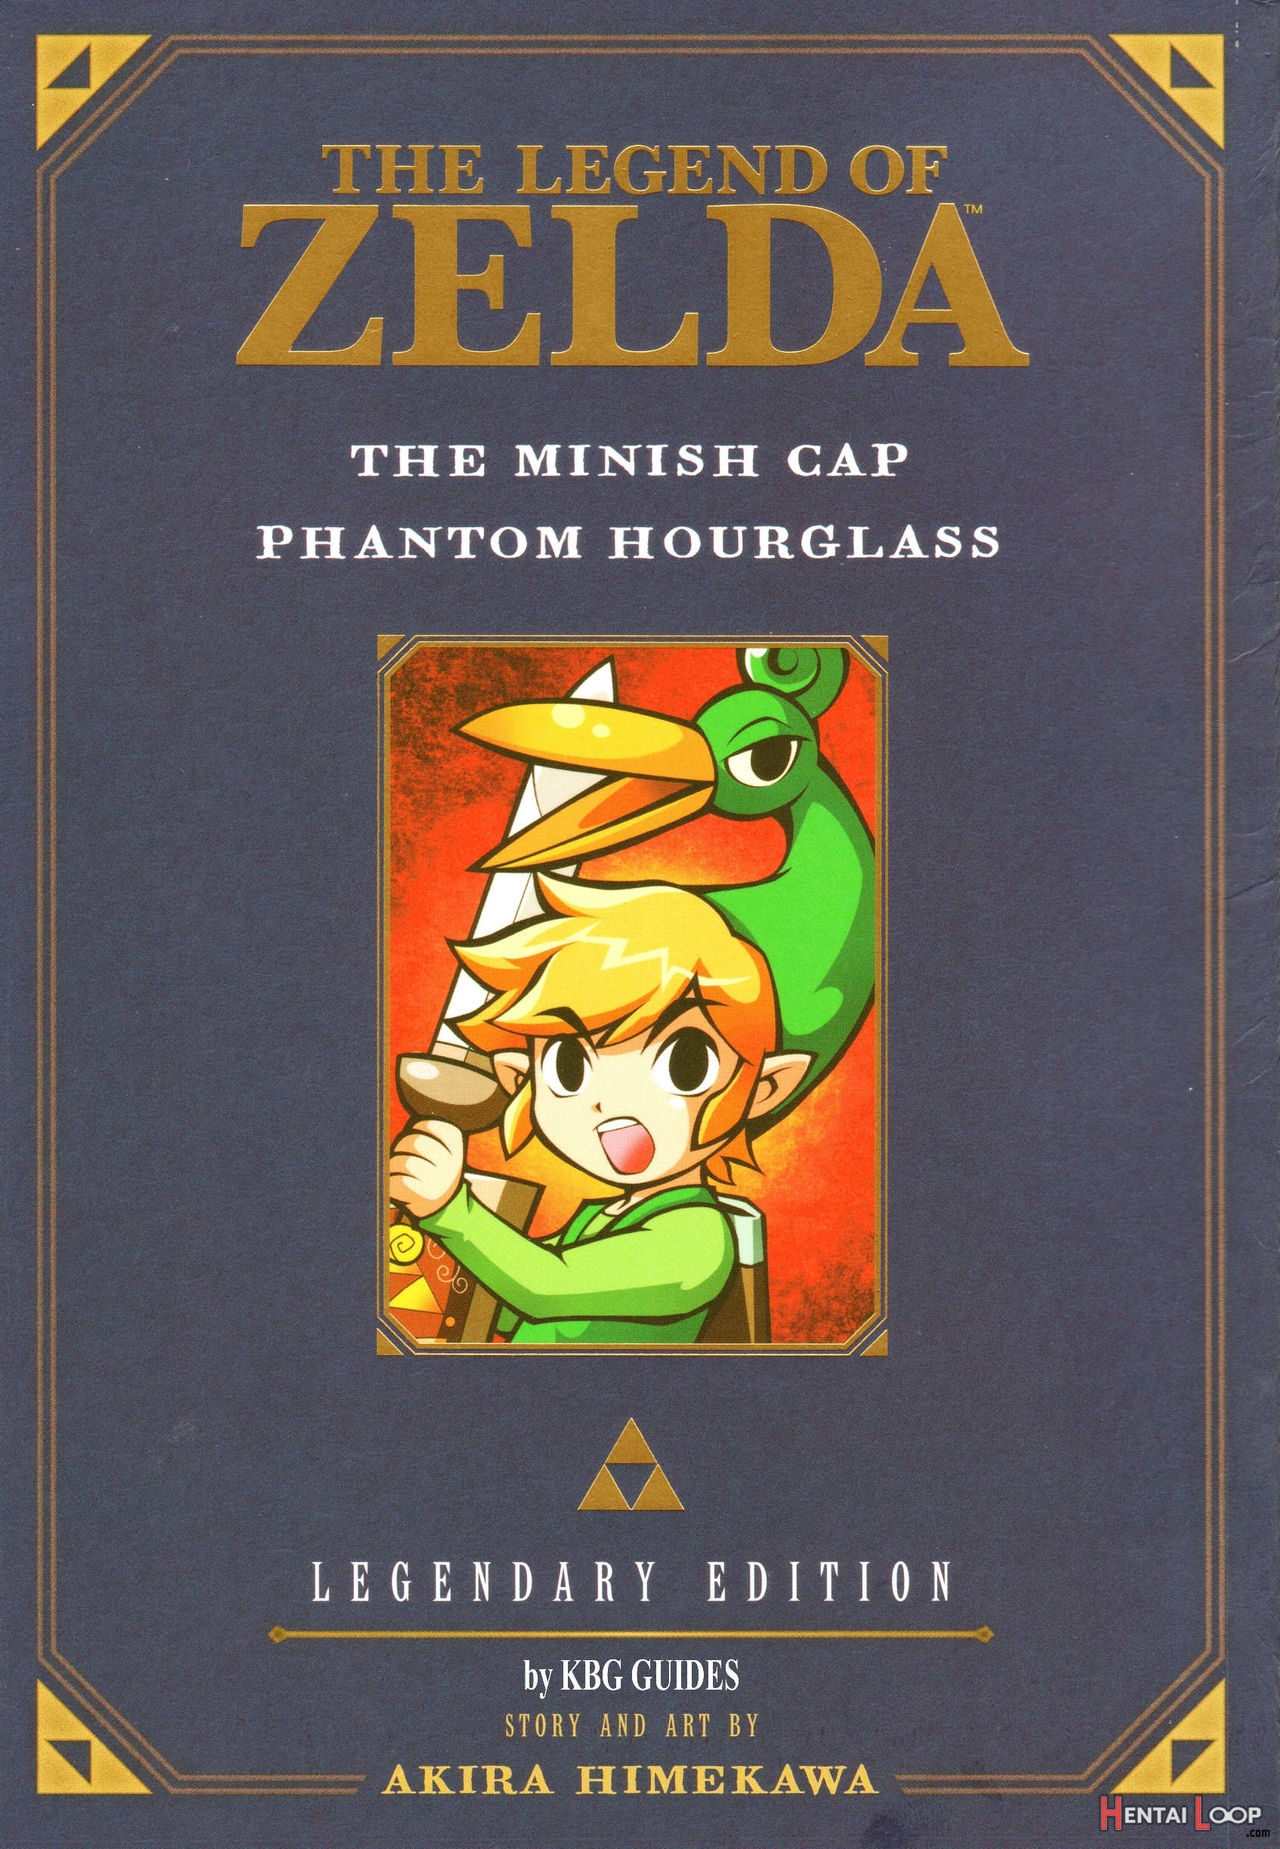 The Legend Of Zelda - Minish Cap Manga page 1